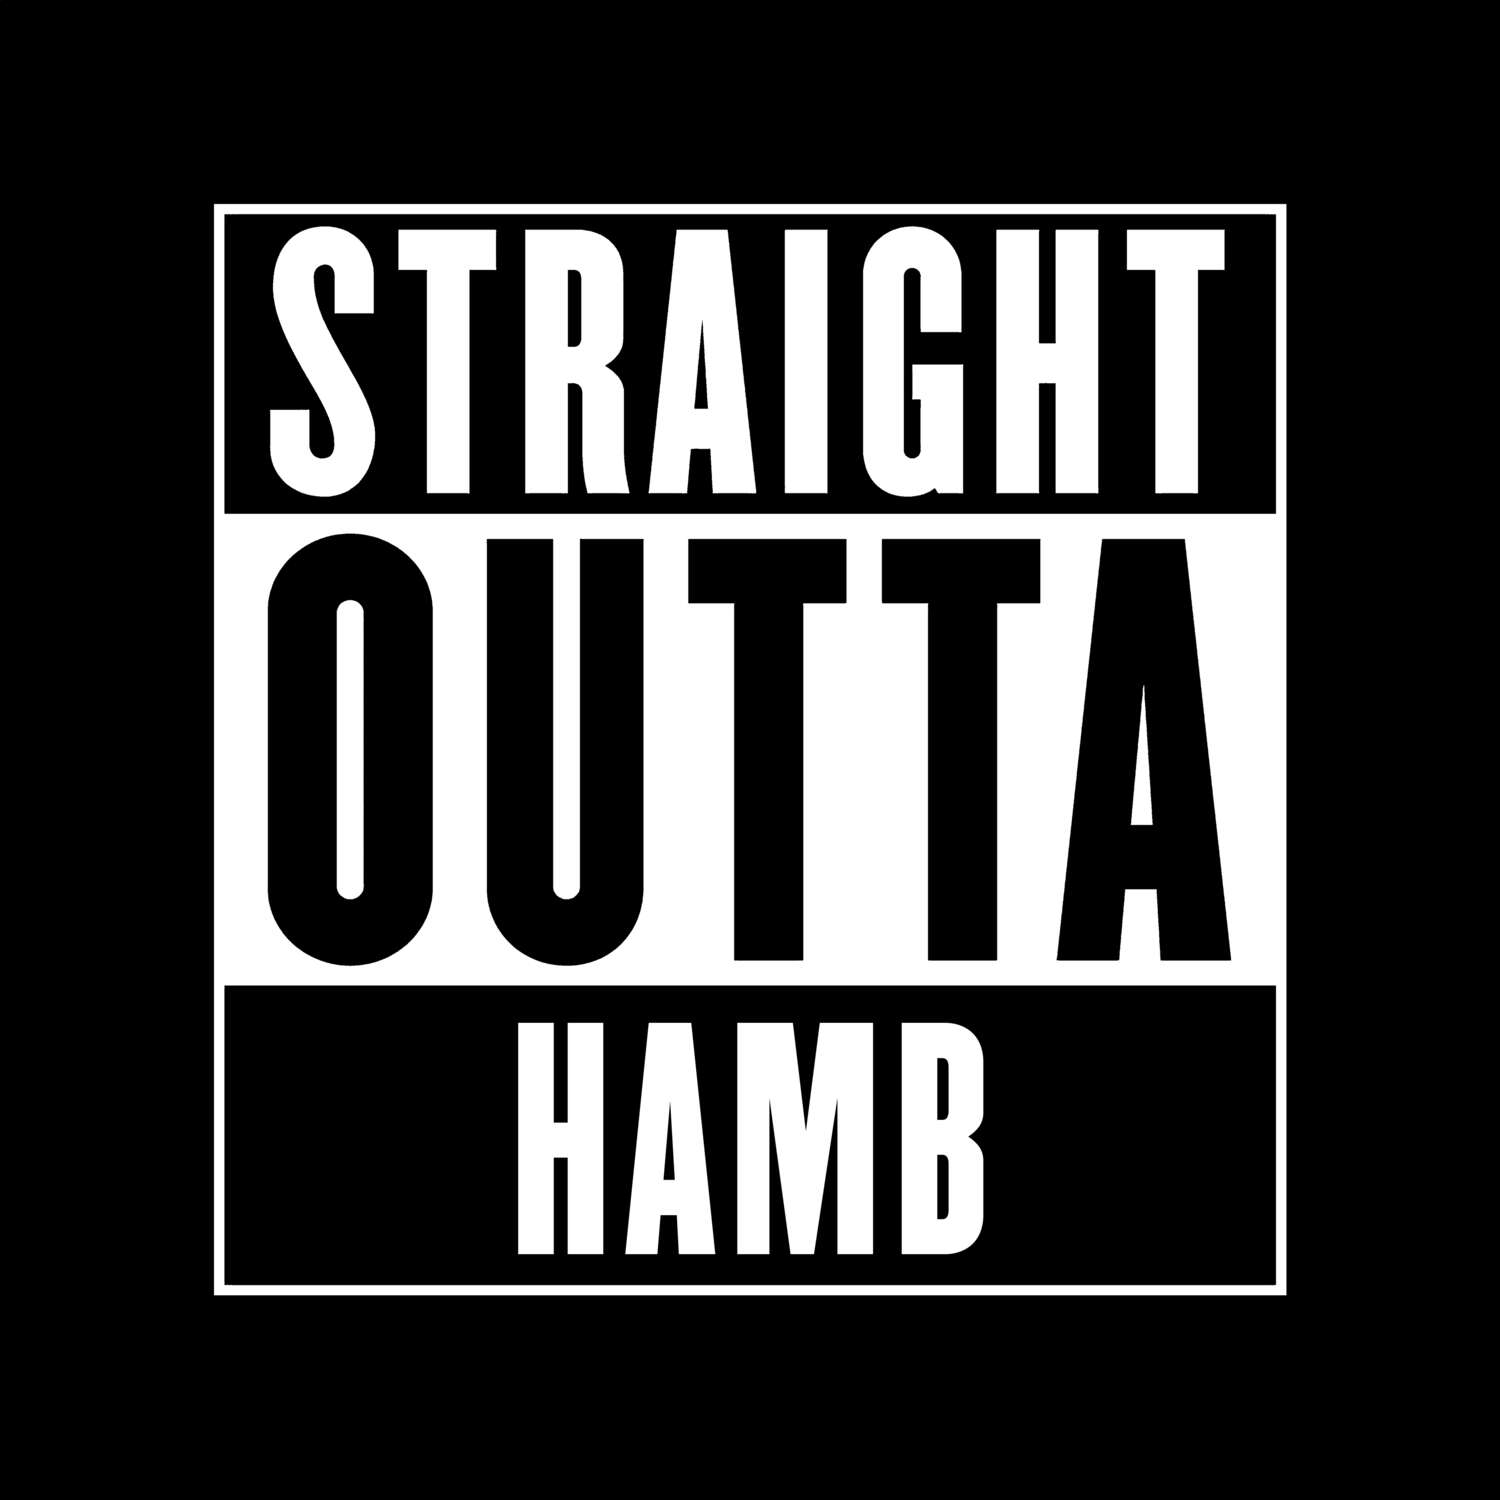 Hamb T-Shirt »Straight Outta«